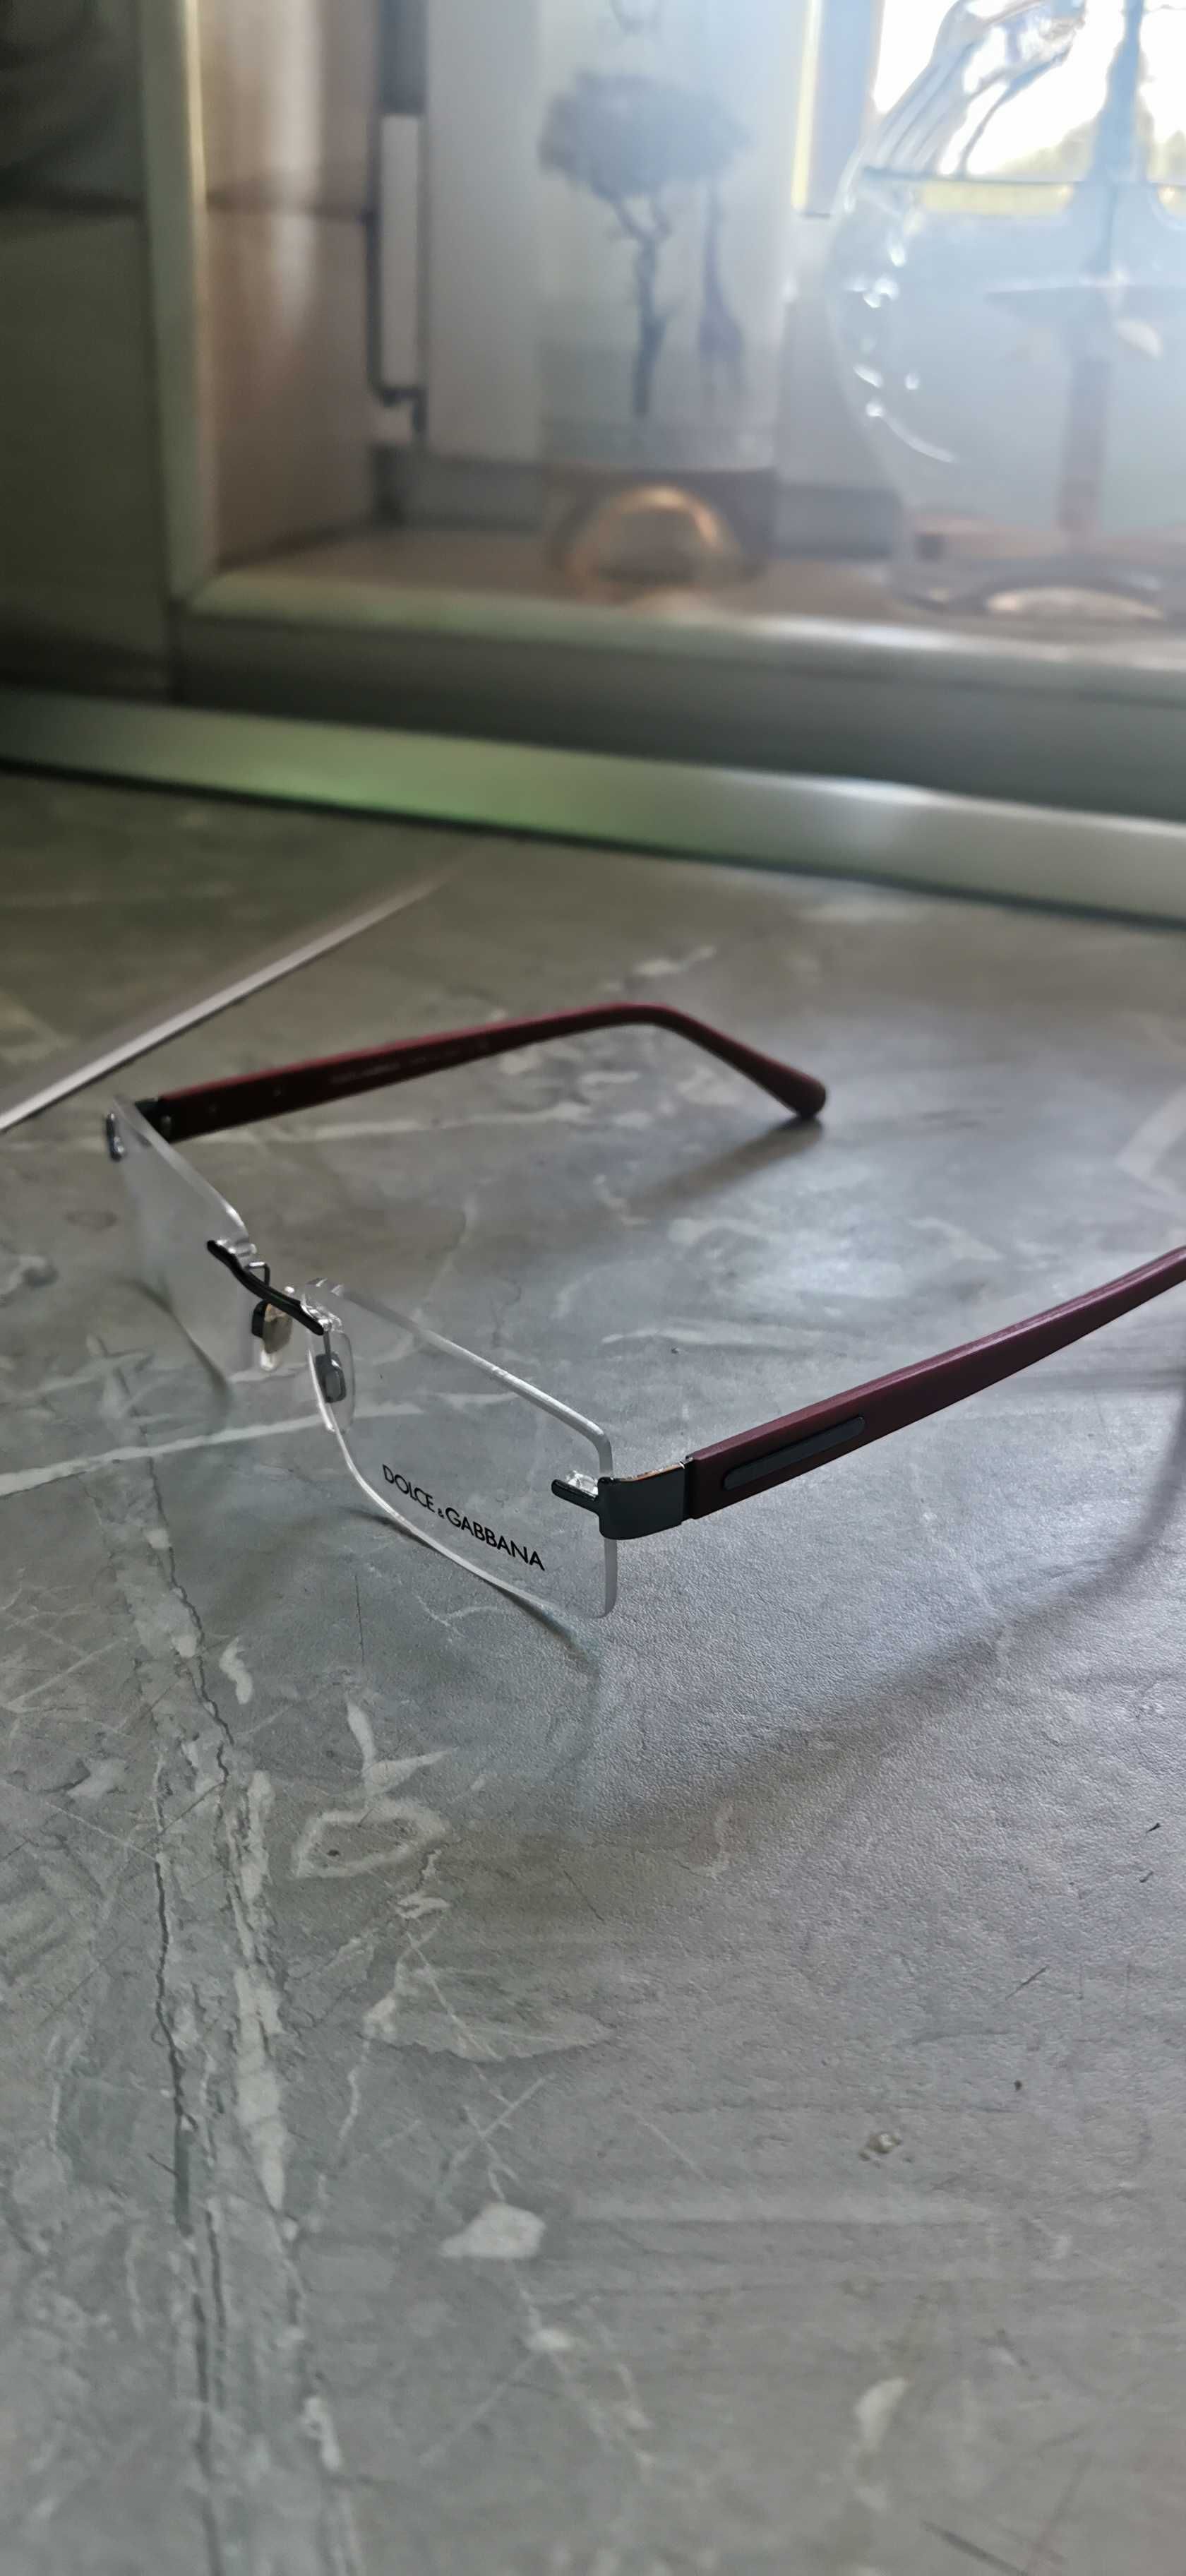 Ochelari D&G in stare foarte buna, nepurtati lentile fara dioptrii